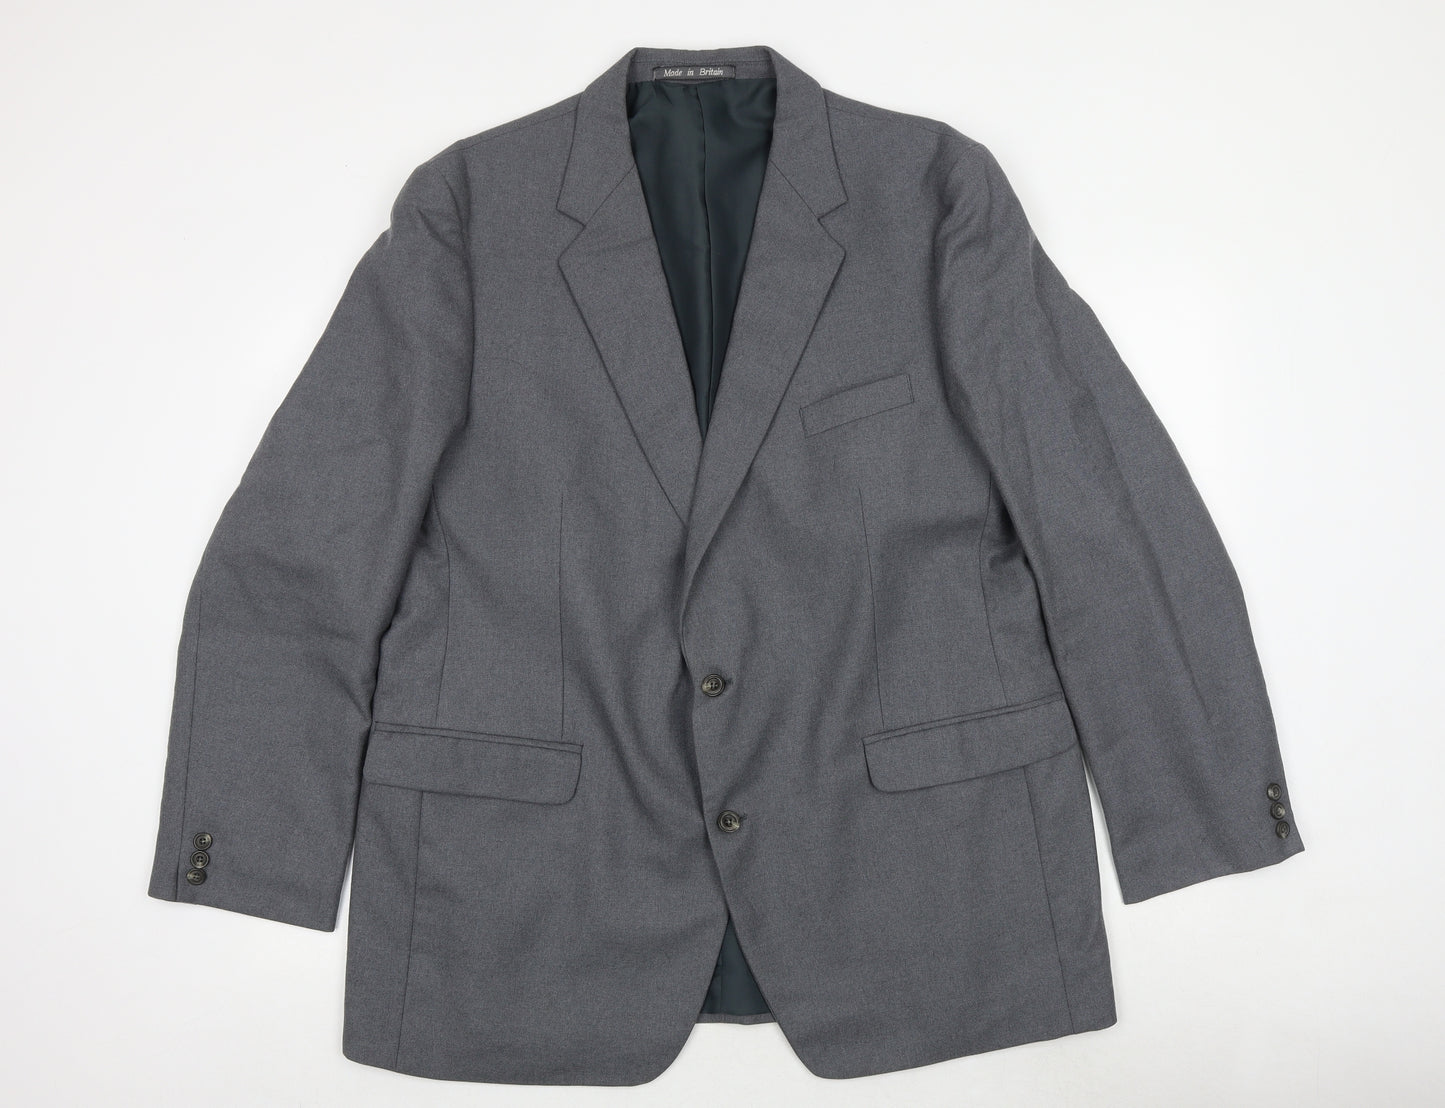 Grendale Mens Grey Wool Jacket Suit Jacket Size 44 Regular